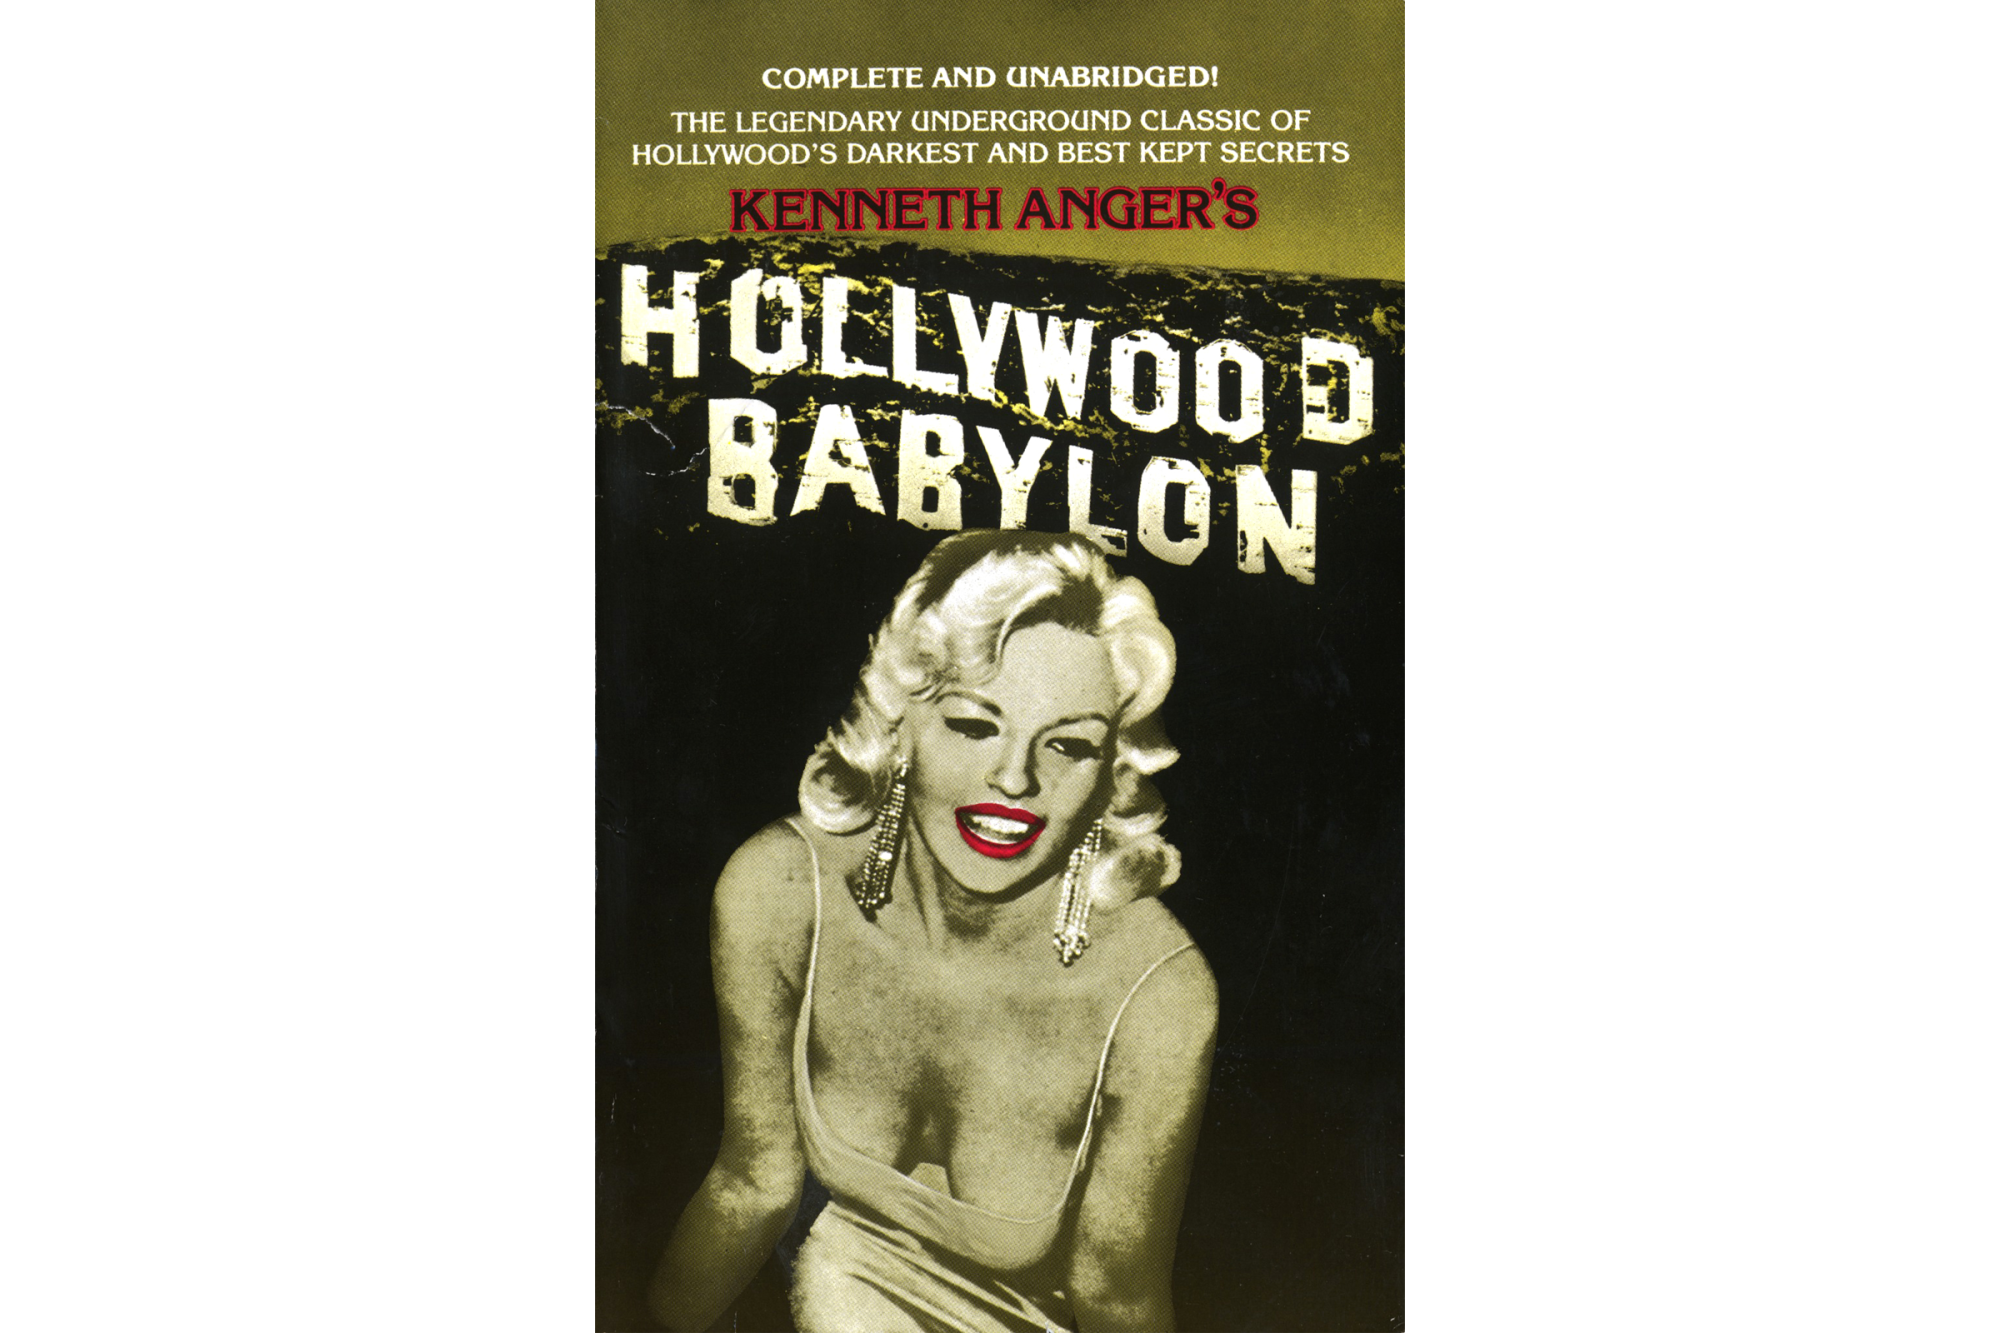 "Hollywood Babylon" by Kenneth Anger